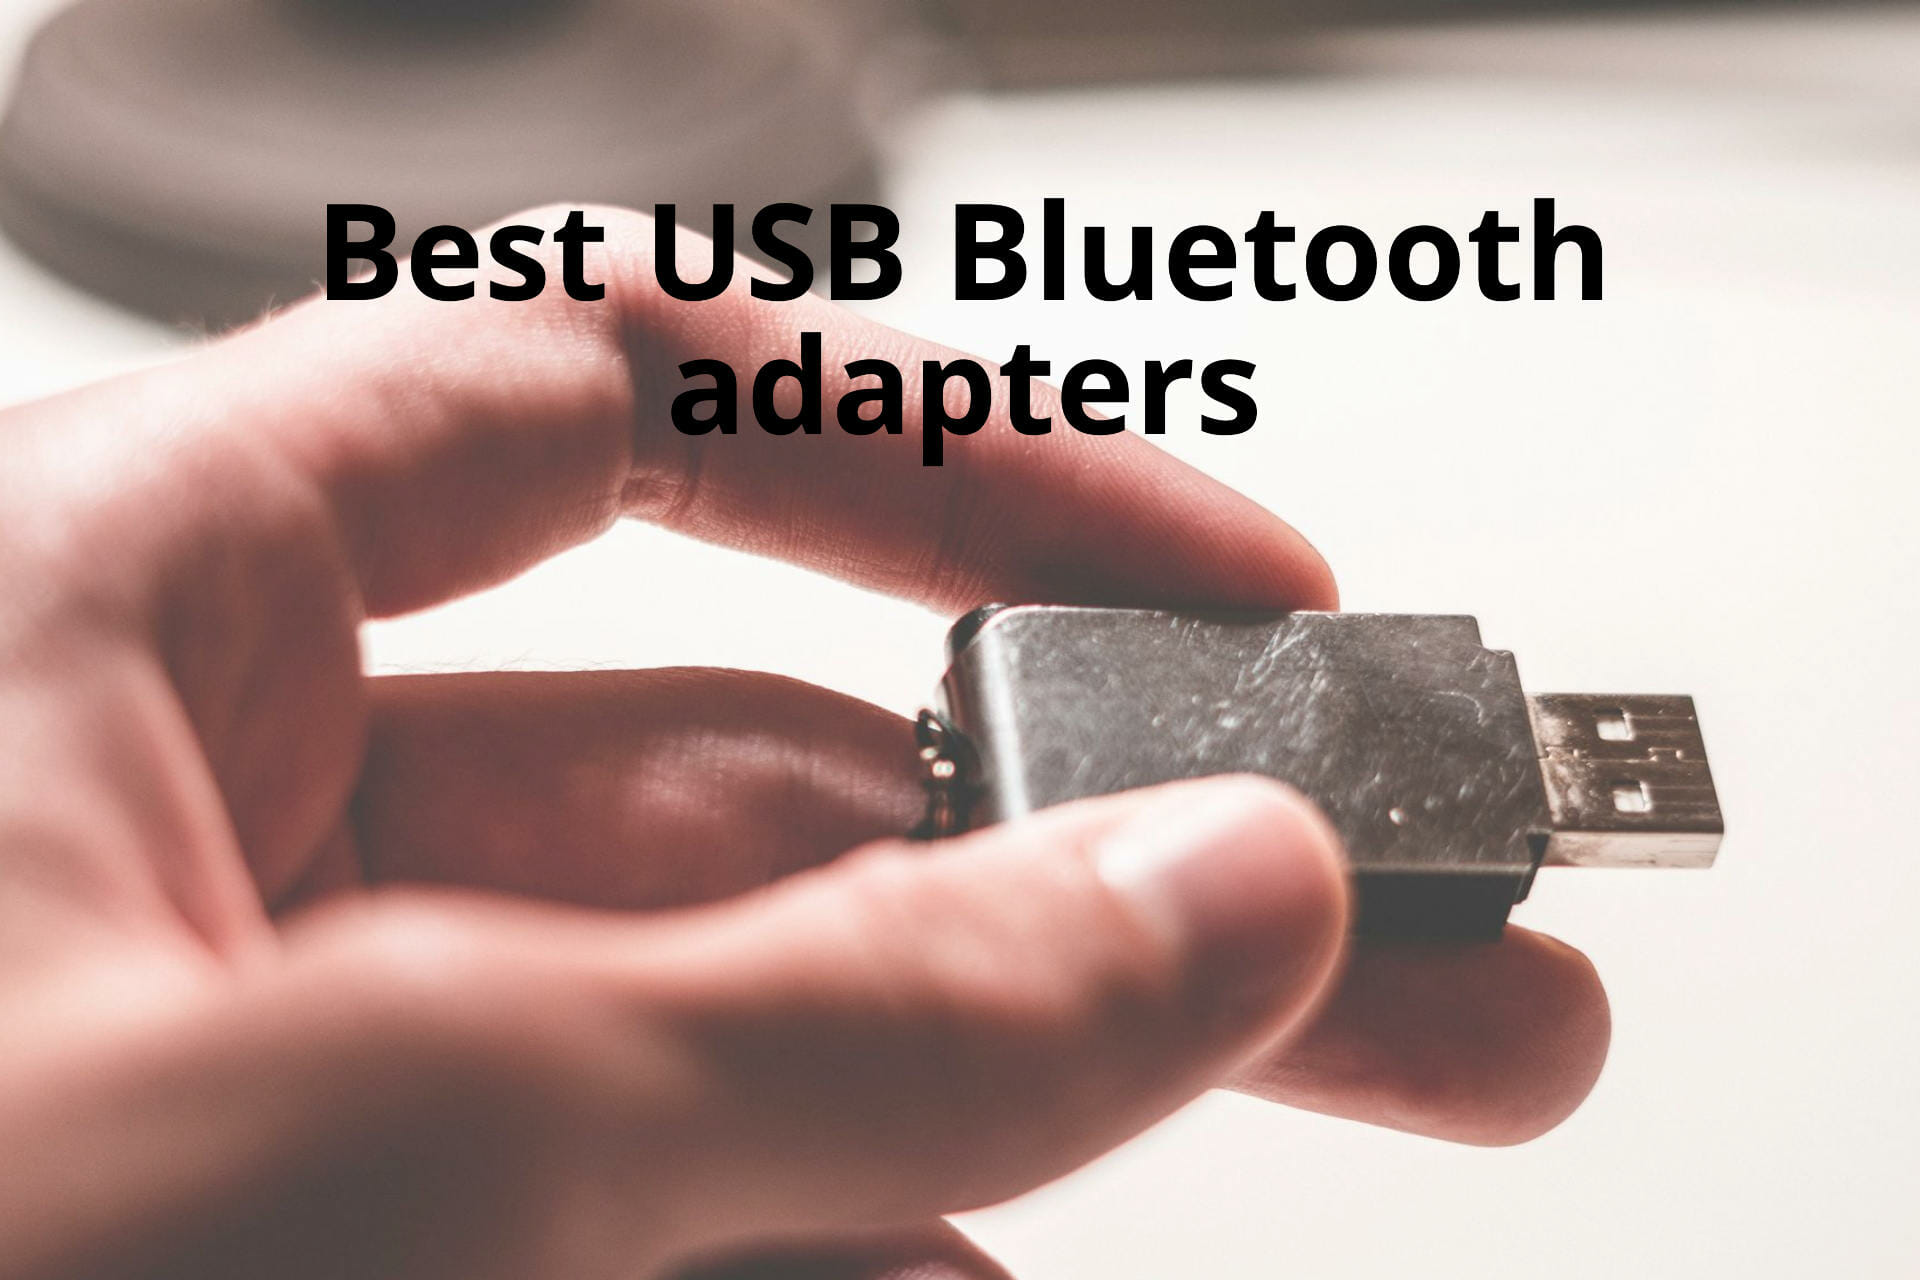 Best USB Bluetooth adapters